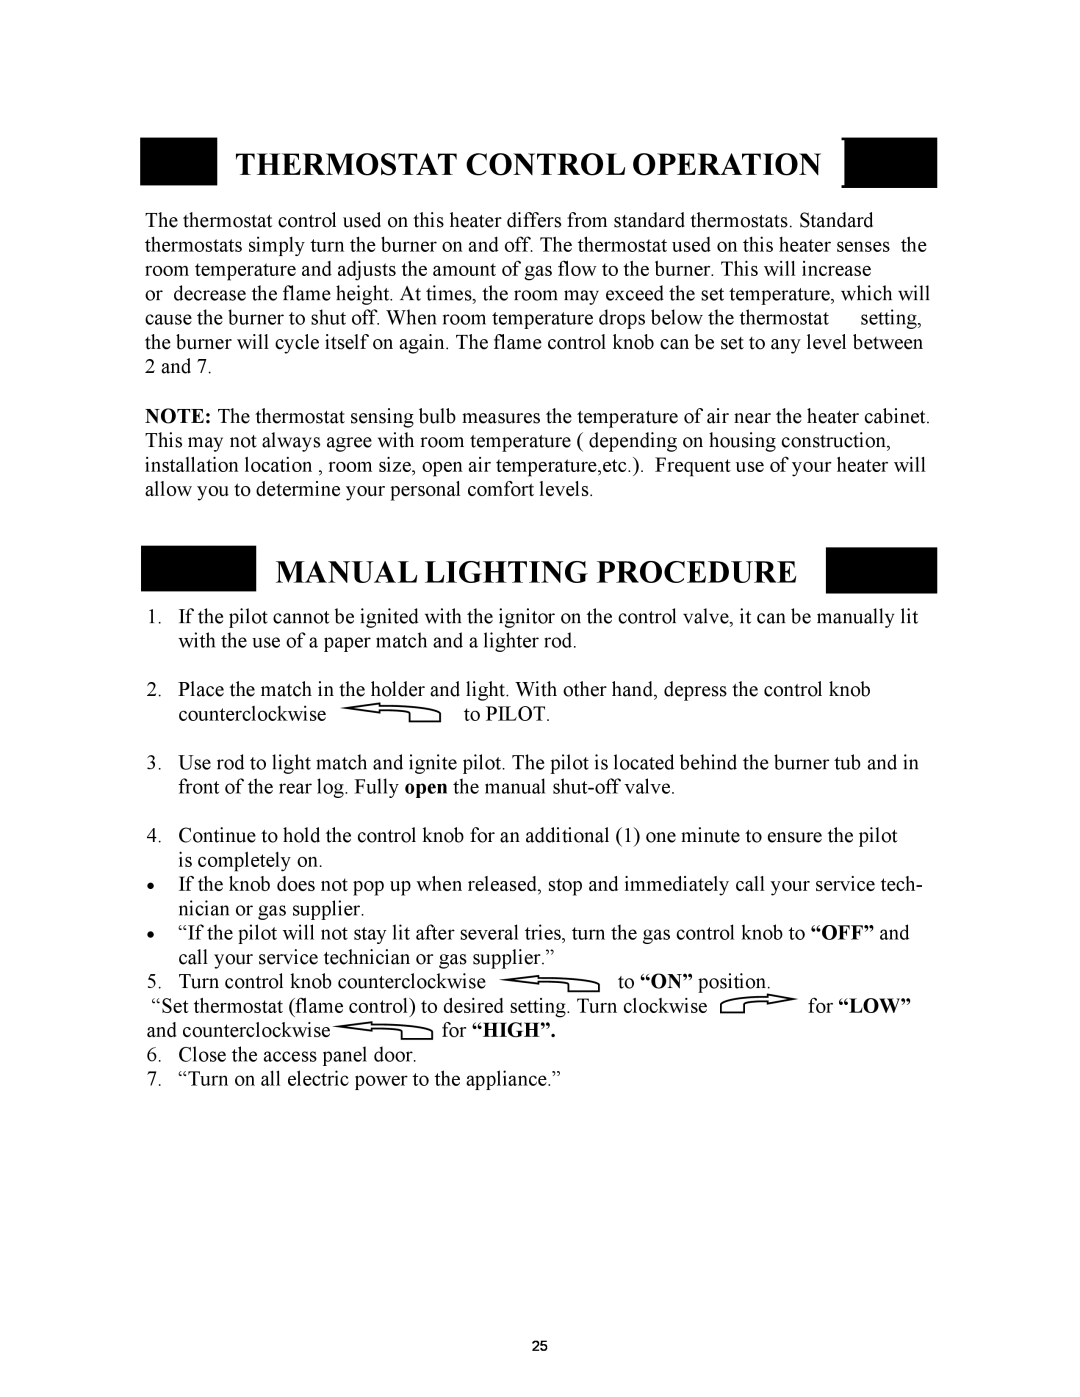 New Buck Corporation 1127B manual Thermostat Control Operation, Manual Lighting Procedure 